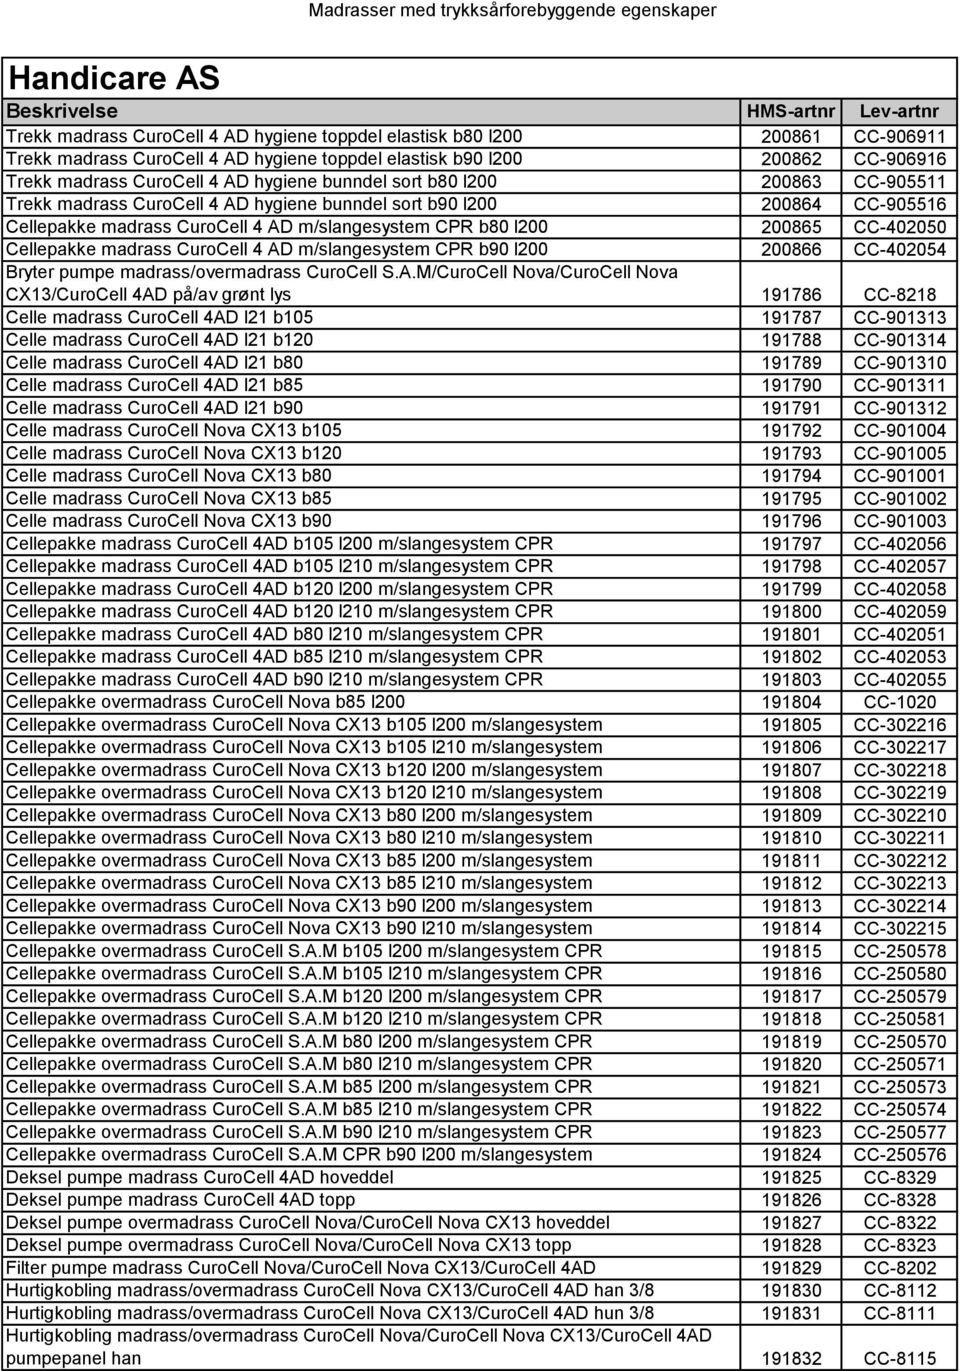 m/slangesystem CPR b80 l200 200865 CC-402050 Cellepakke madrass CuroCell 4 AD